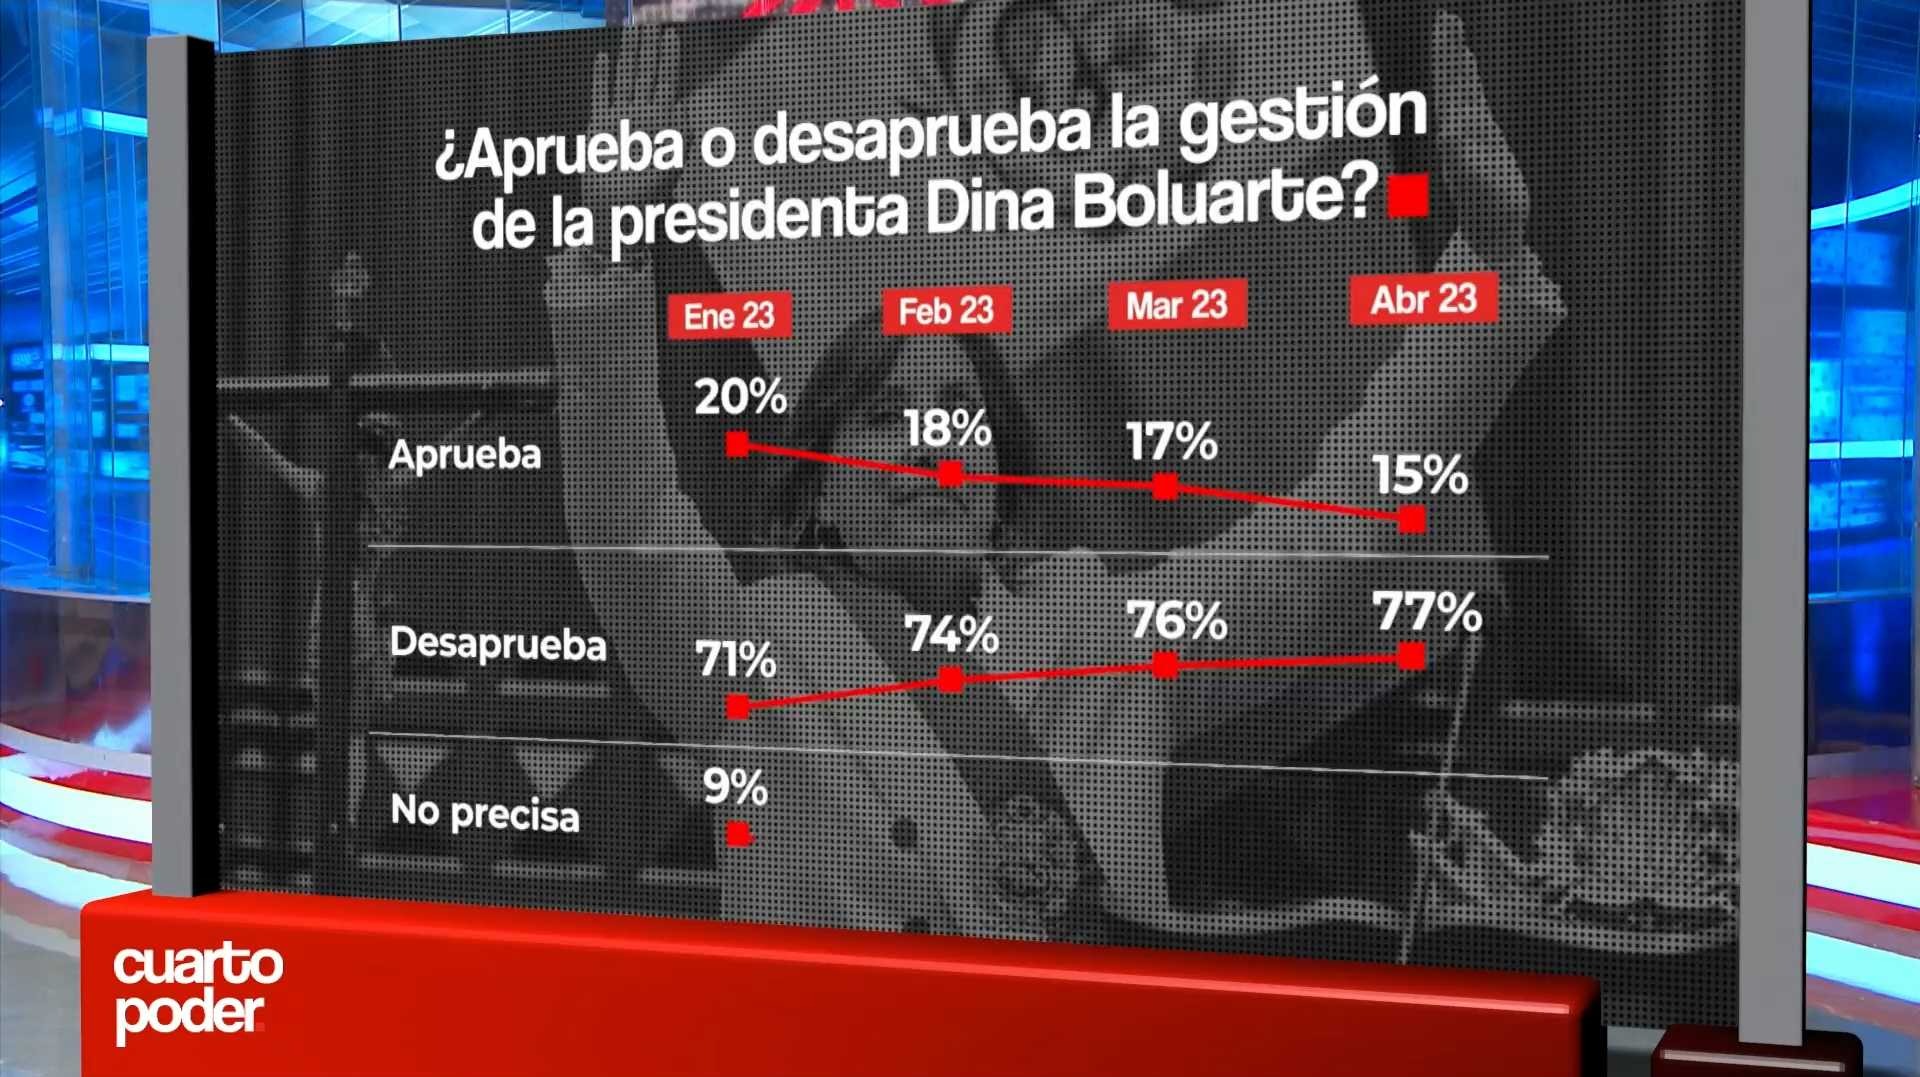 Fuente: Encuesta Ipsos-América TV.